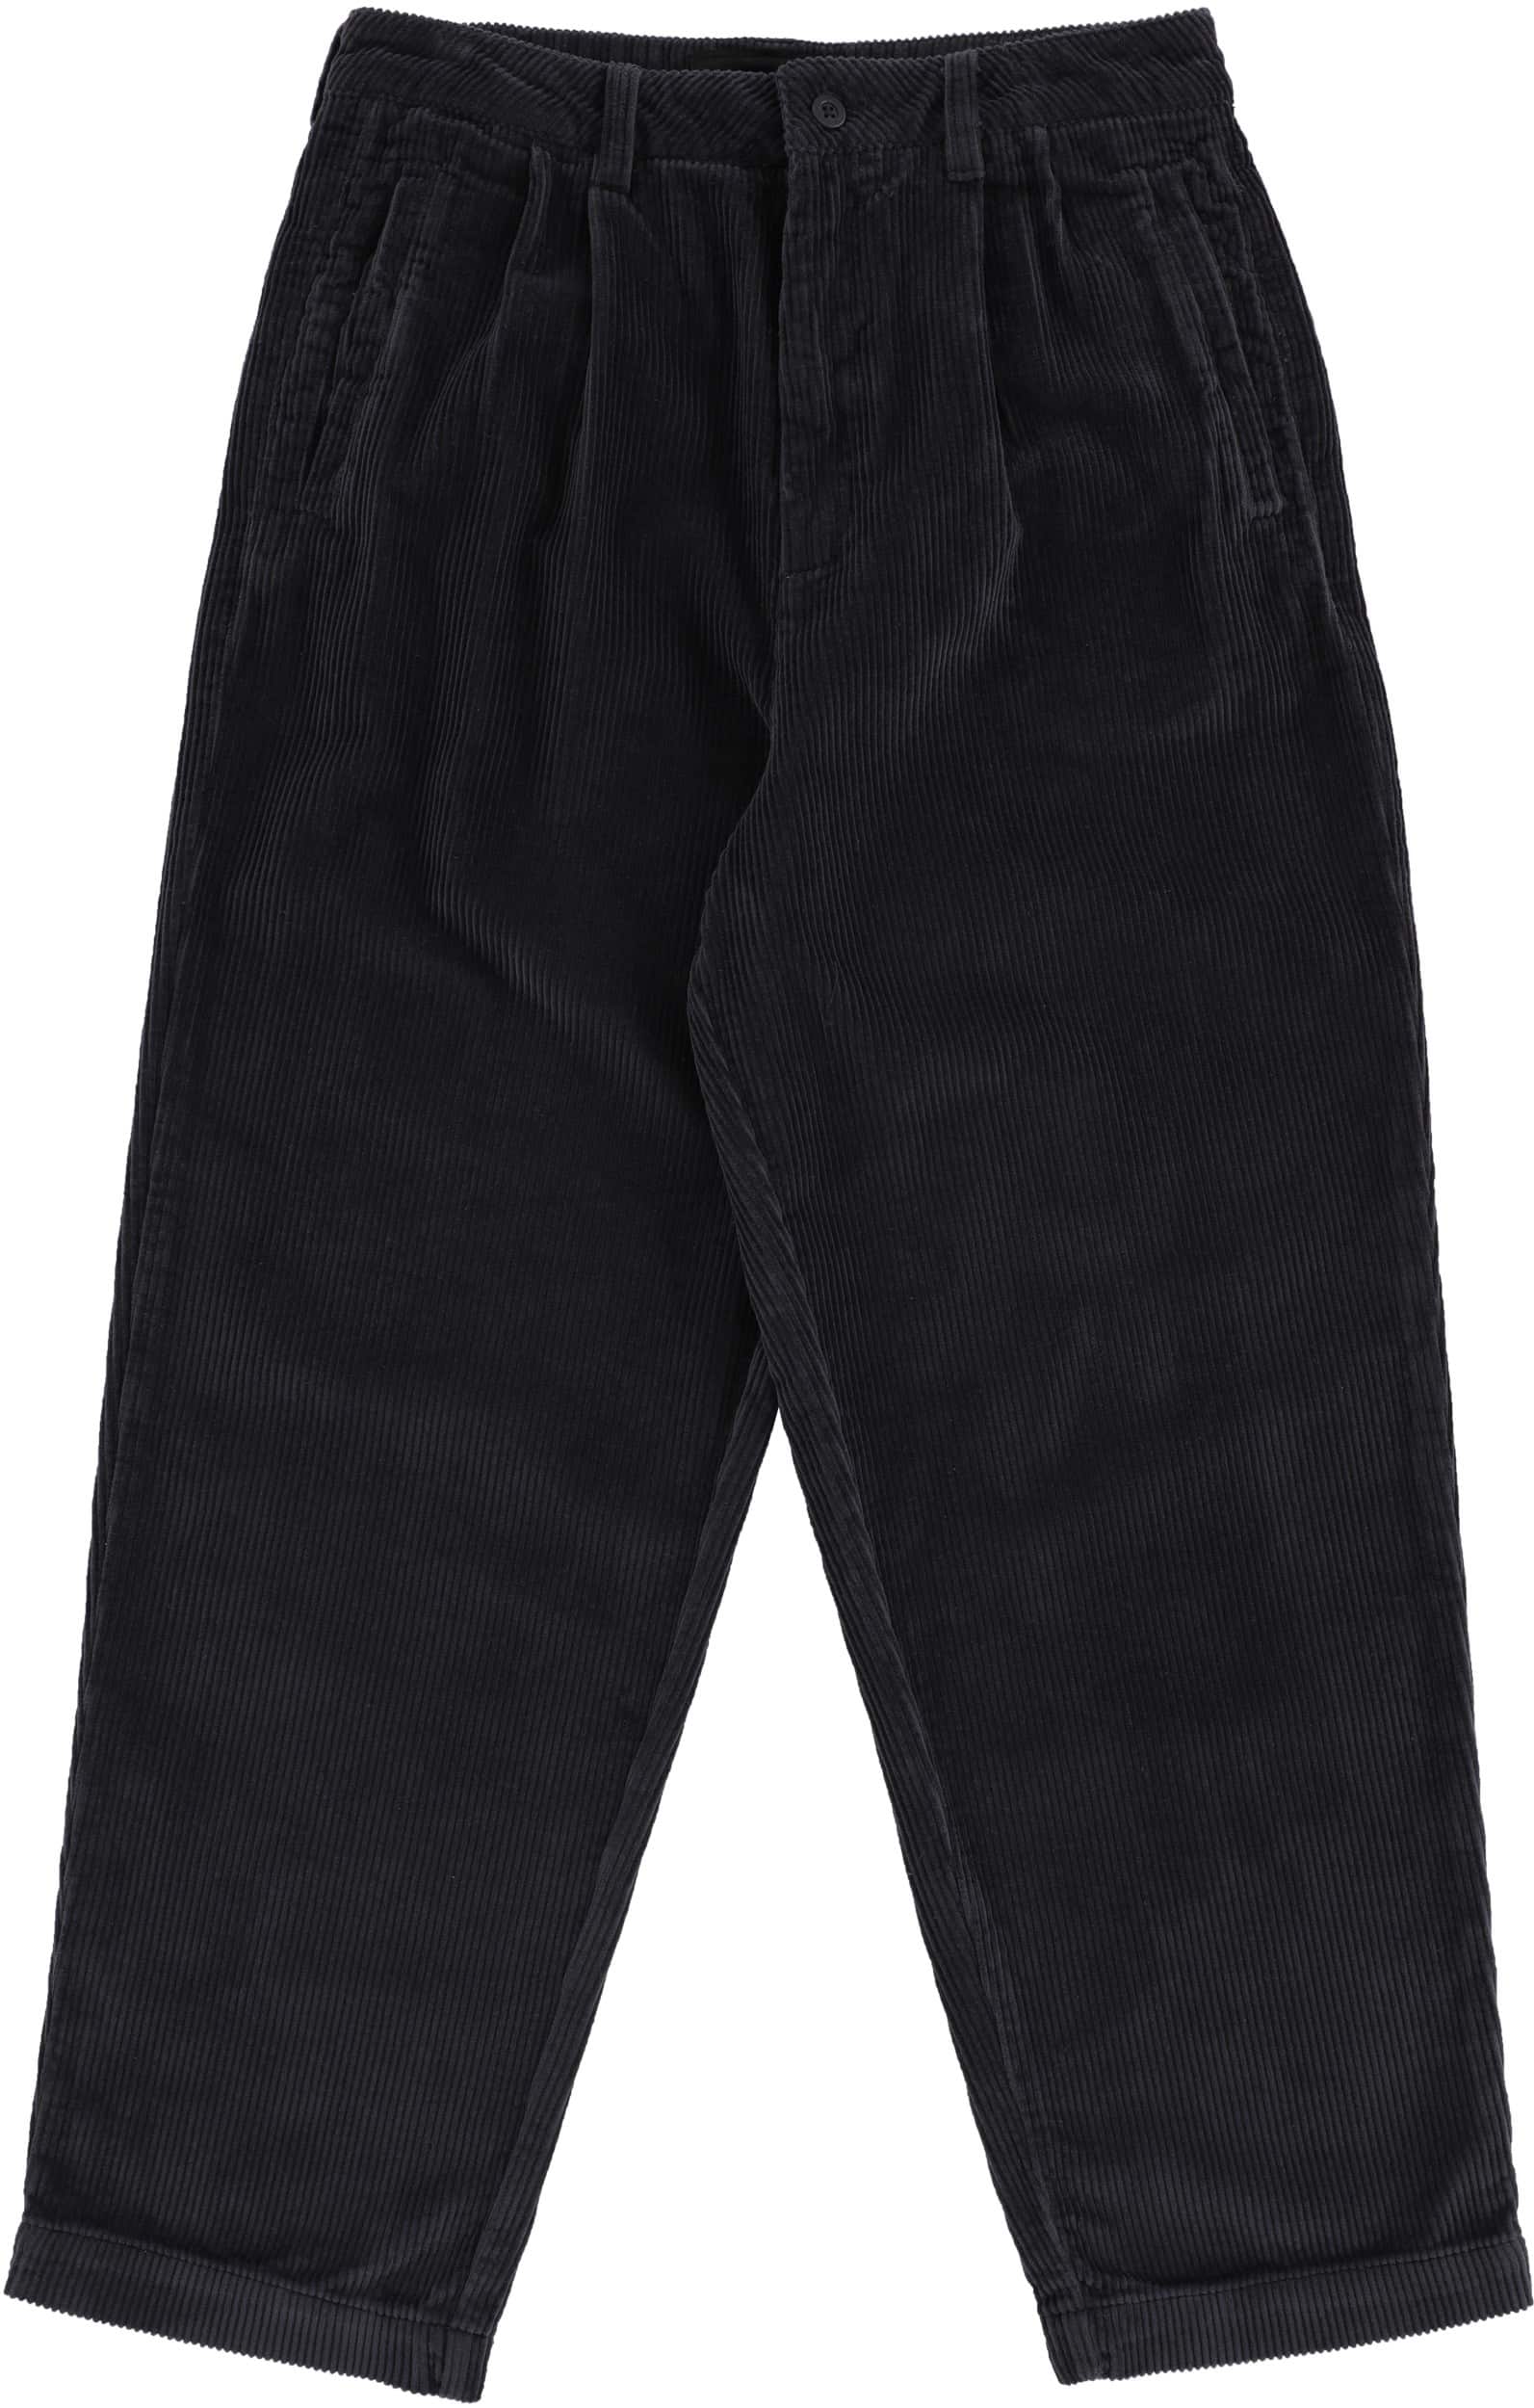 Quasi Elliott Trouser Pants - graphite - Free Shipping | Tactics